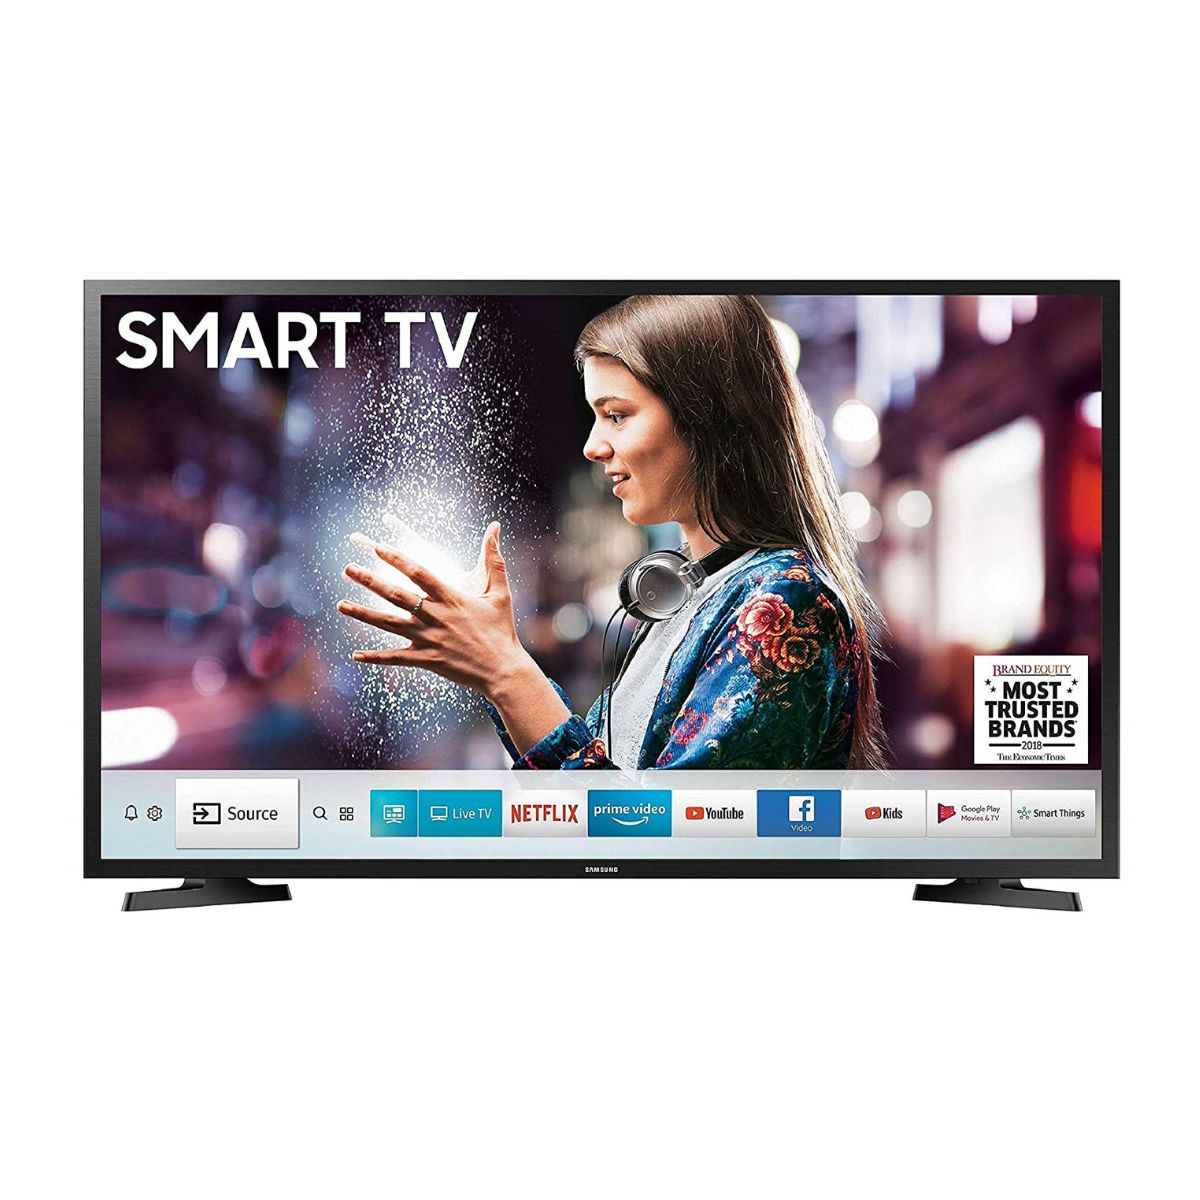 Samsung Smart TV - Full HD - UA43T5310BKXXL - 43 Inches